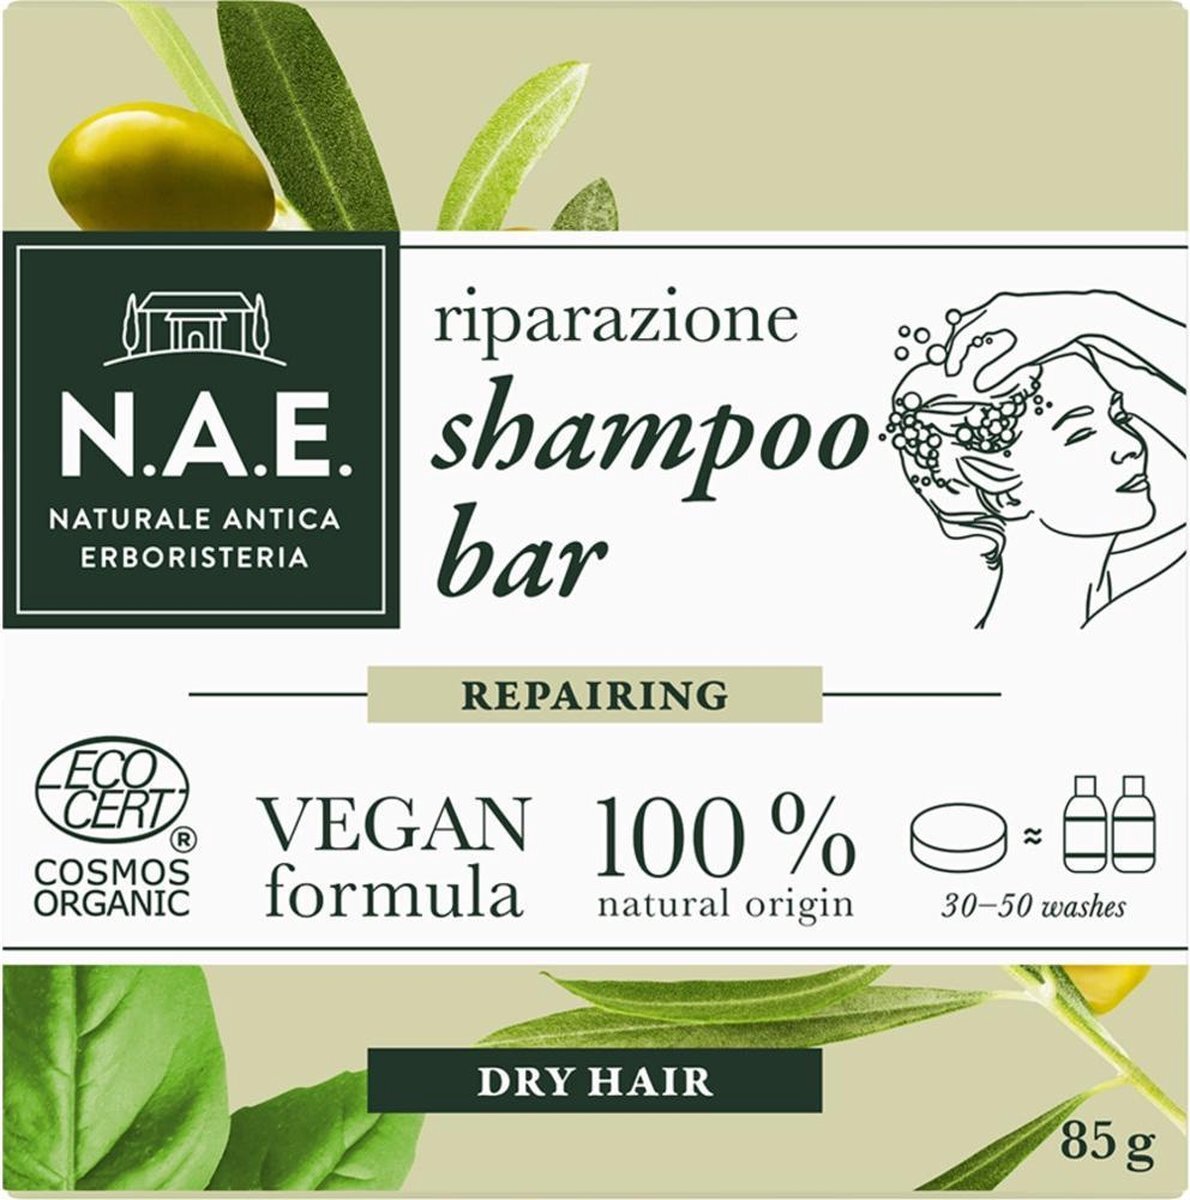 NAE Riparazione Shampoo Bar Repairing